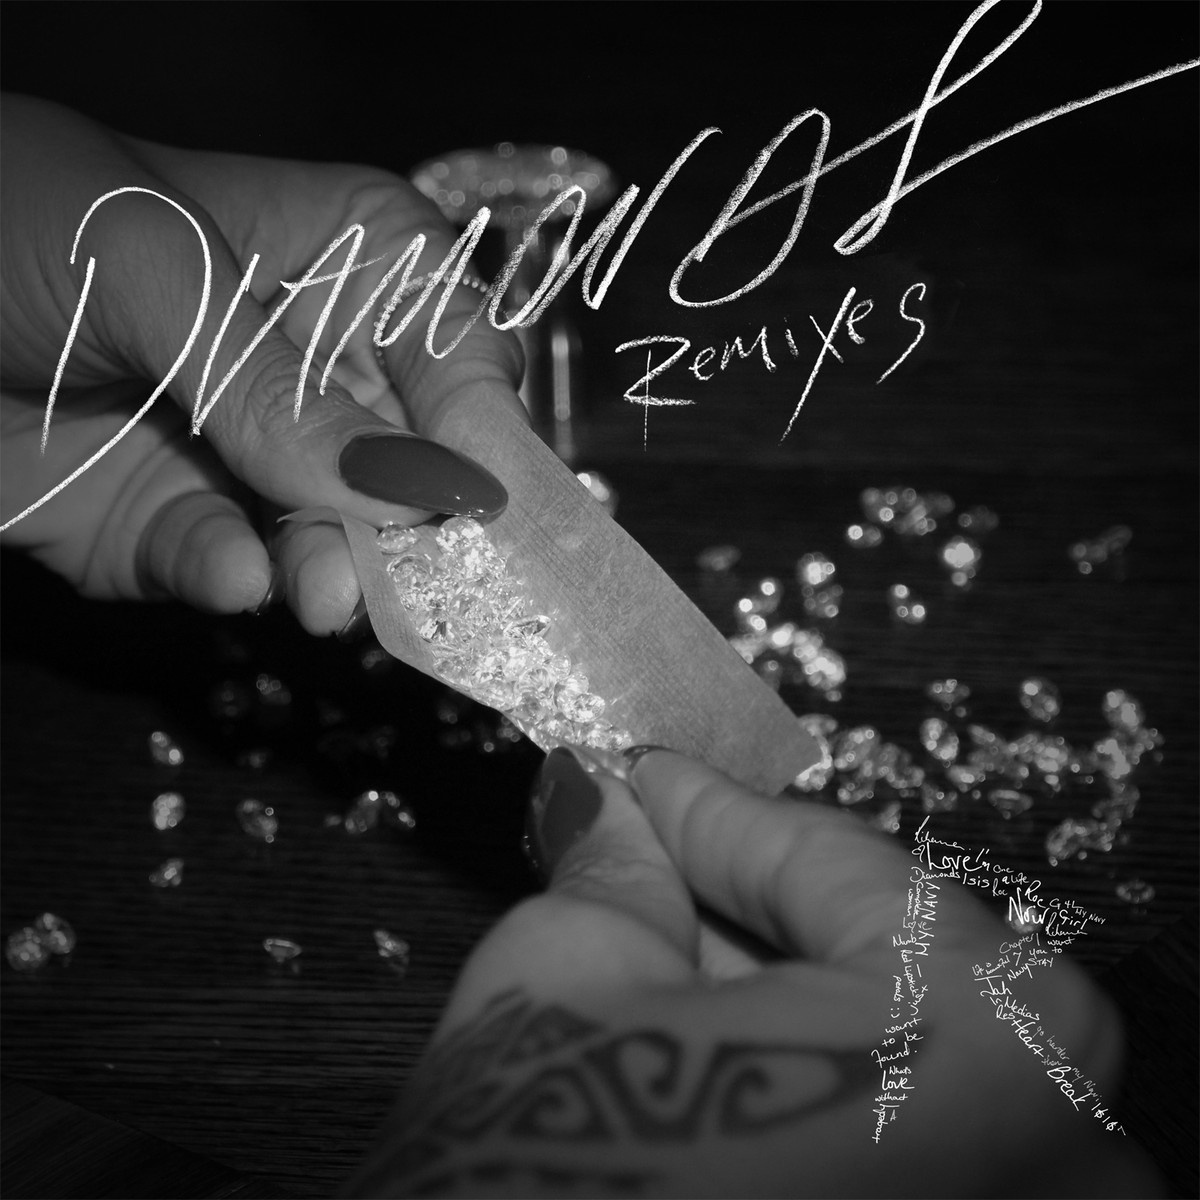 Diamonds (Congorock Remix Extended)